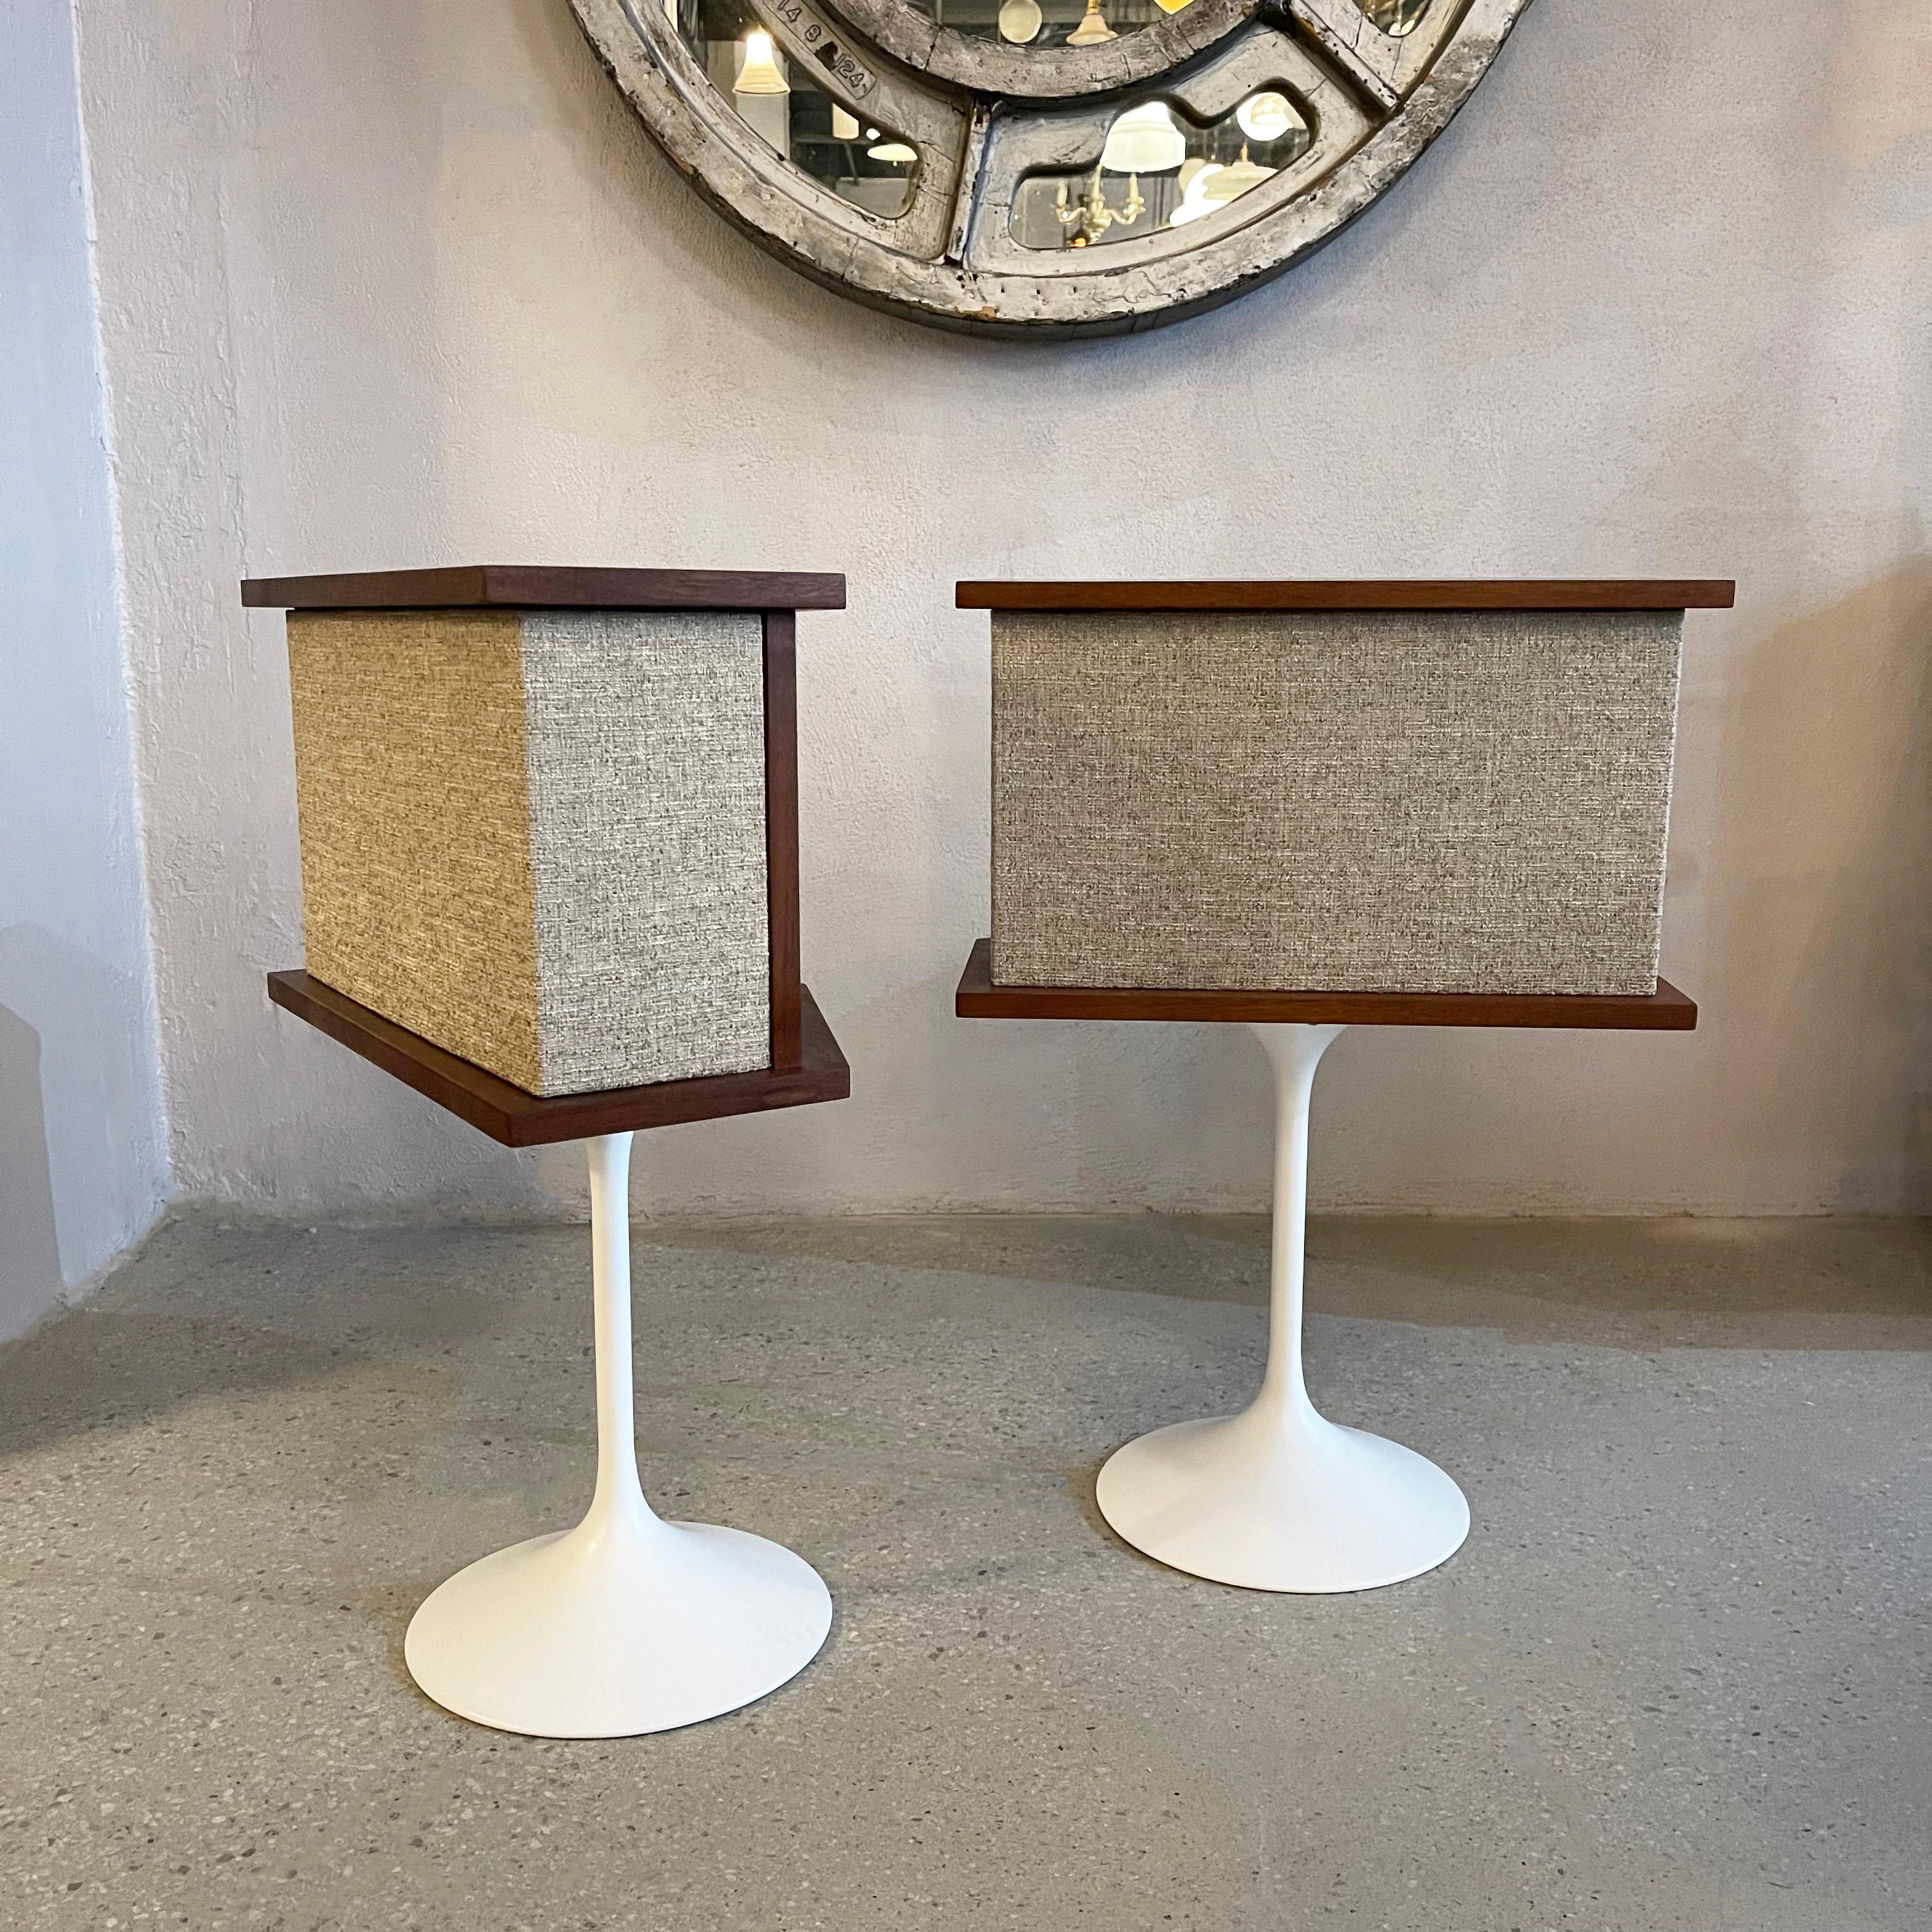 Bose 901 Series Speakers On Eero Saarinen Tulip Bases In Good Condition For Sale In Brooklyn, NY